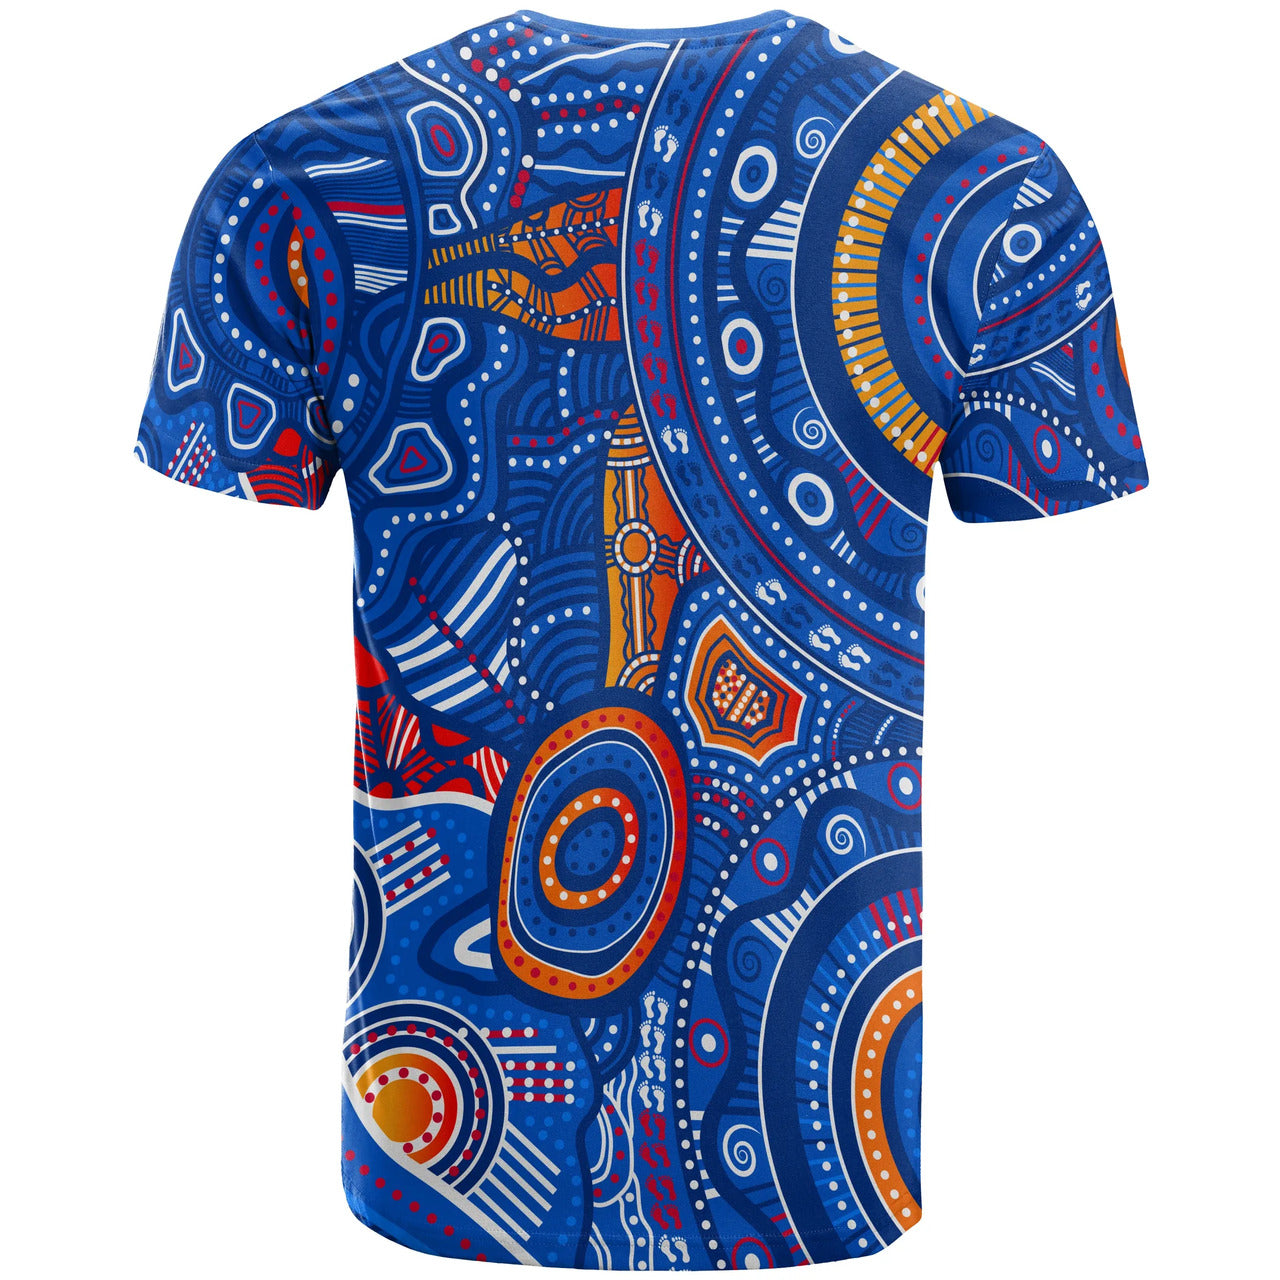 Australia Aboriginal T-Shirt Indigenous Footprint Patterns Blue Color ...